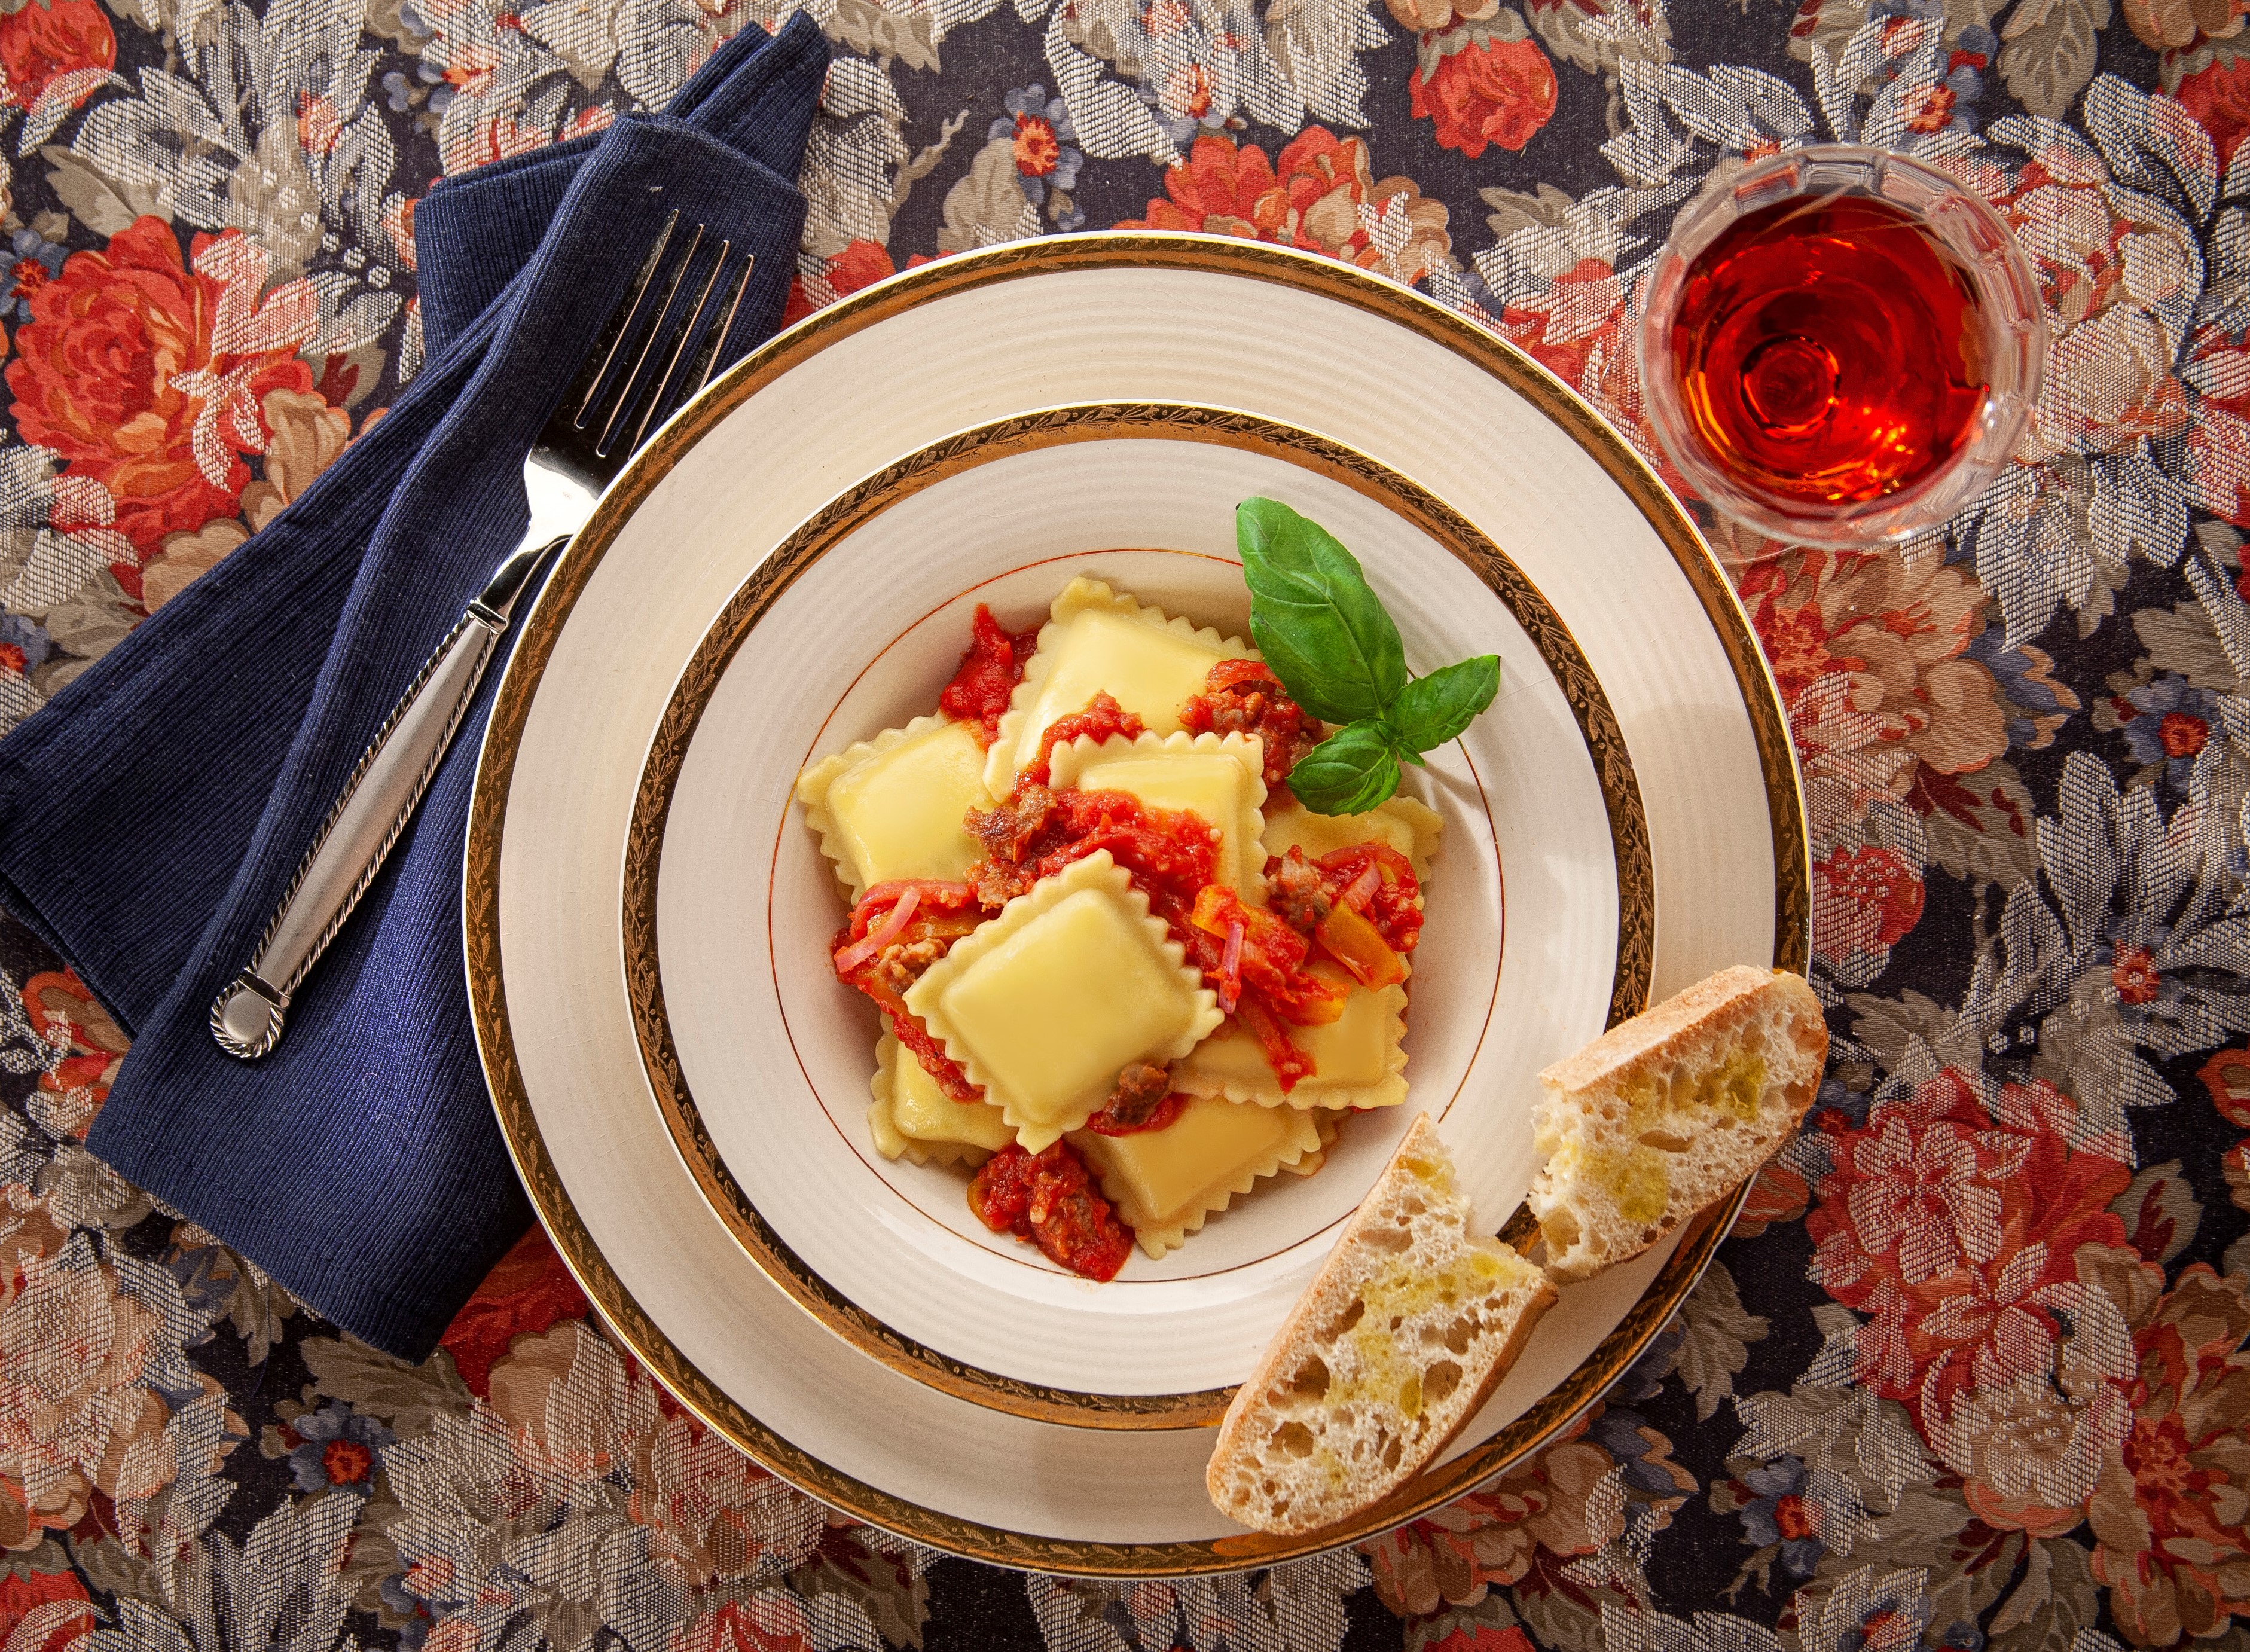 Four Cheese Ravioli with Spicy Arrabbiata Sauce and Italian Sausage